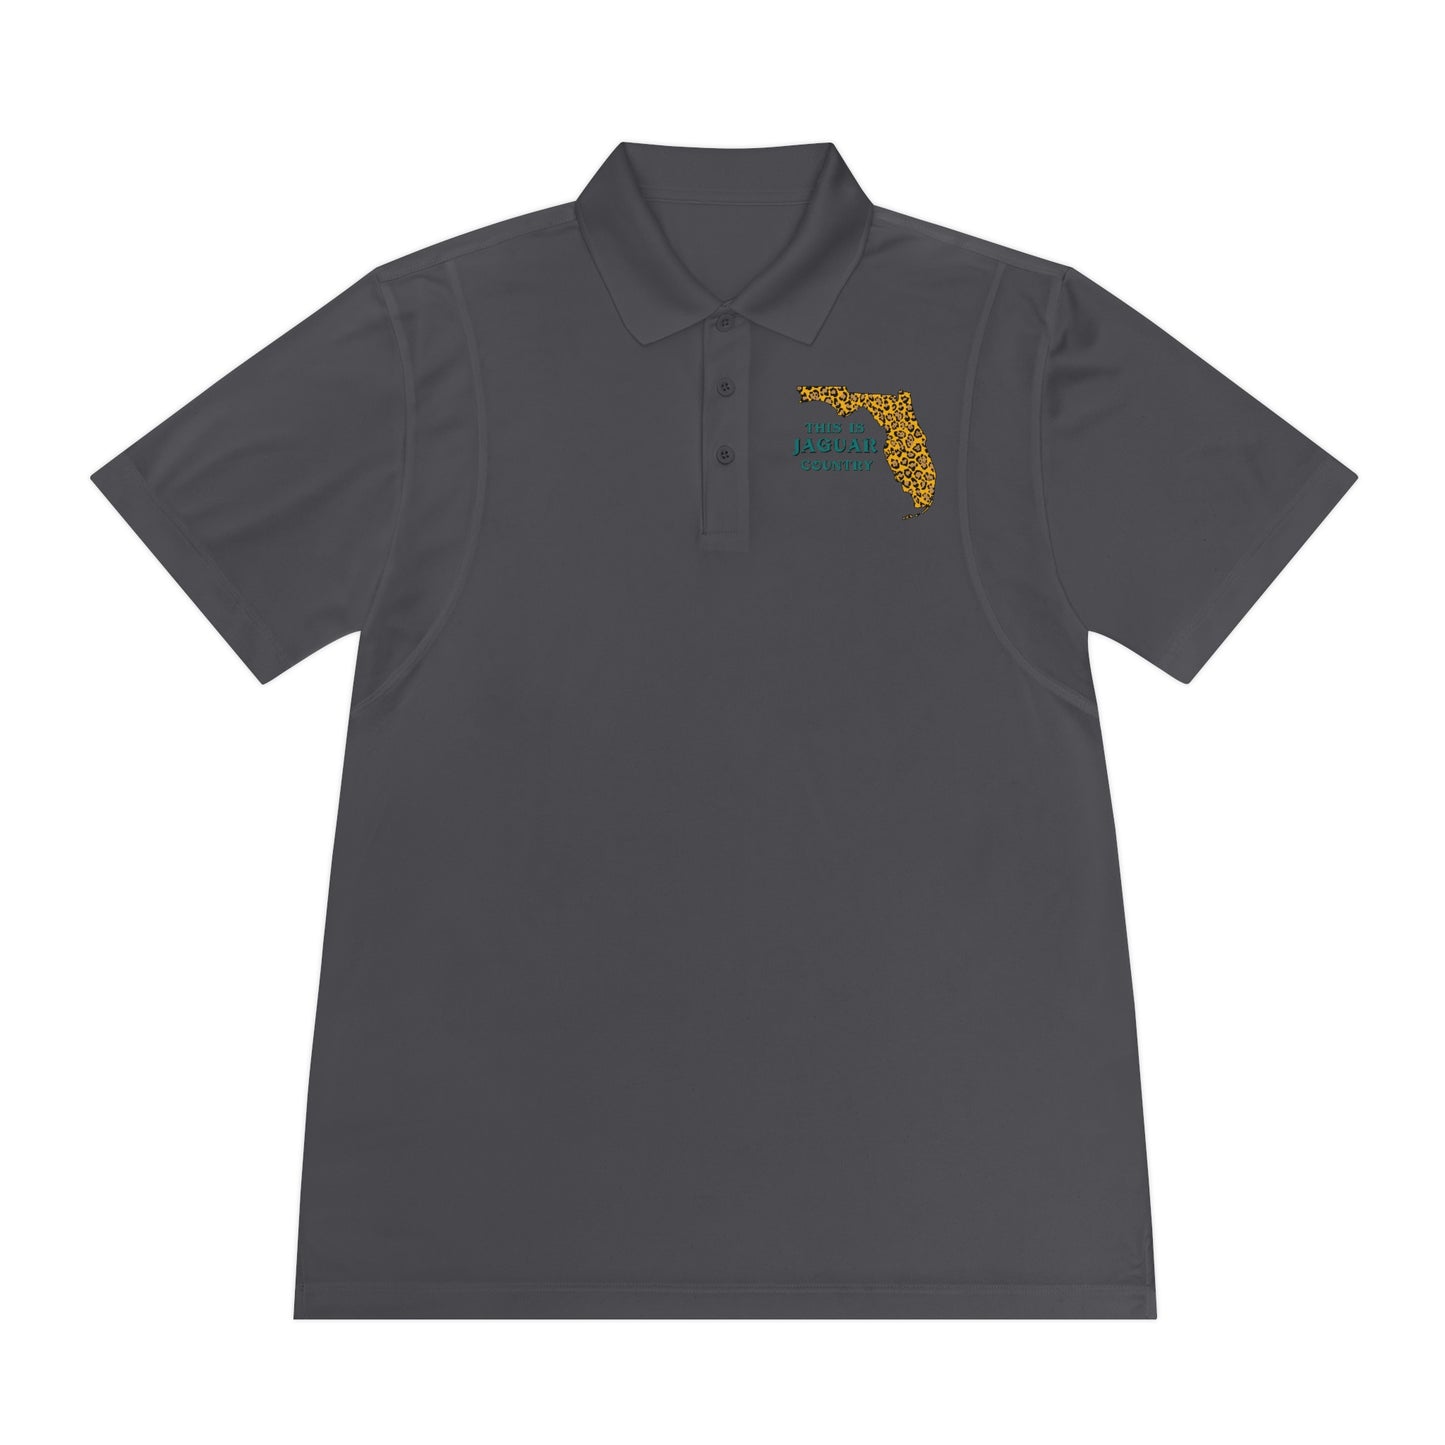 Jaguar Country Men's Sport Polo Shirt